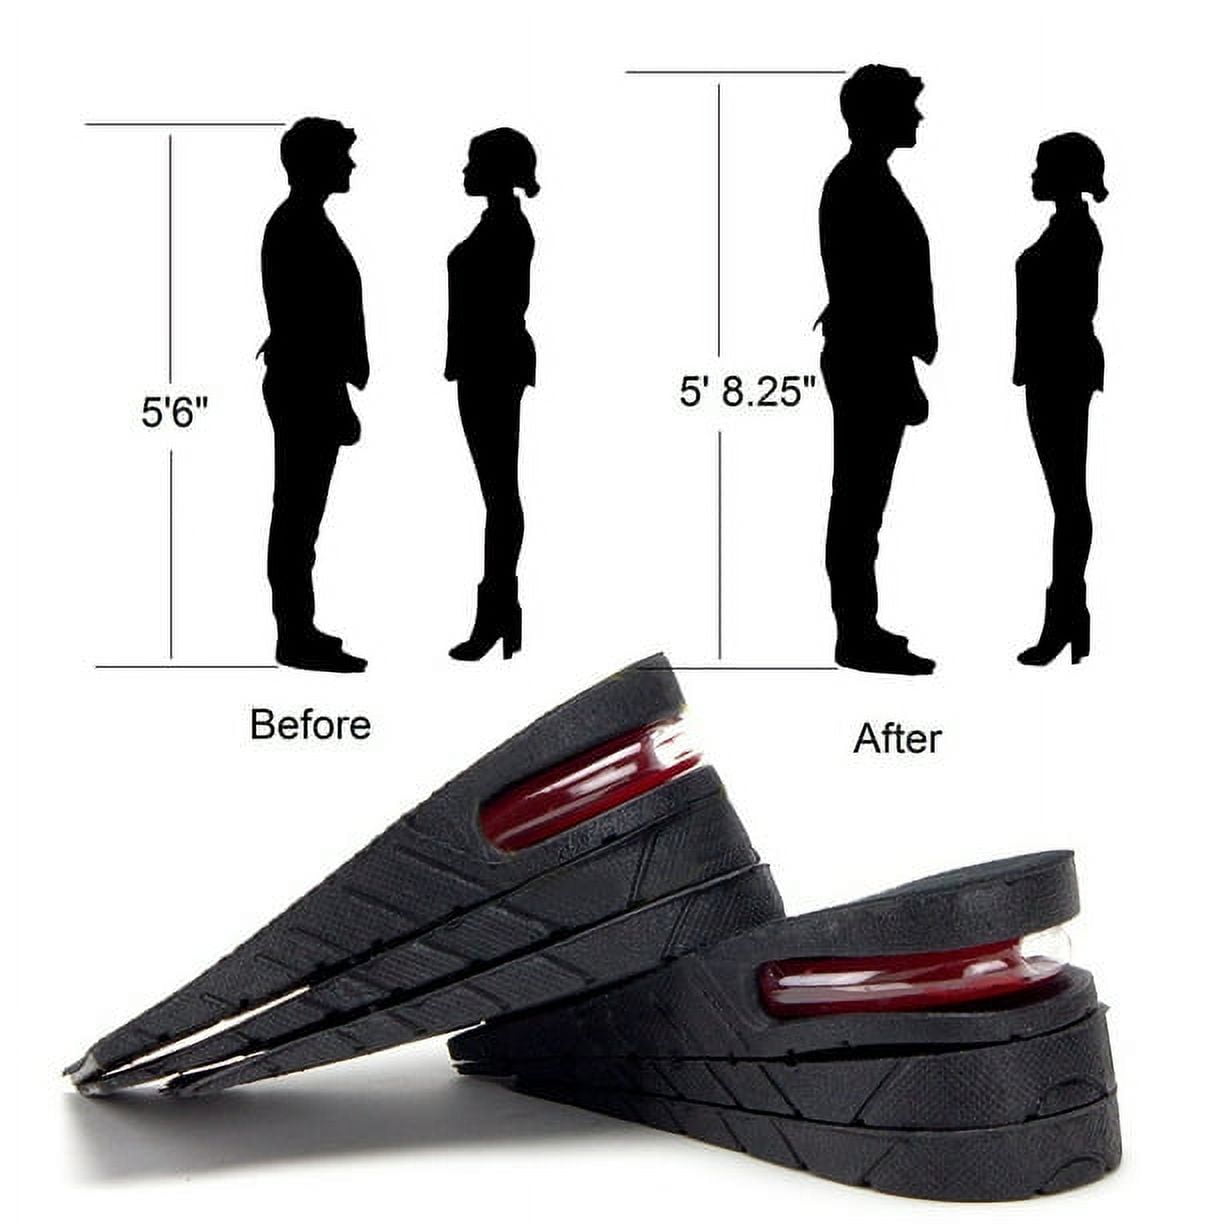 dress formal mens elevator shoes increase height make men taller 2.95 inch